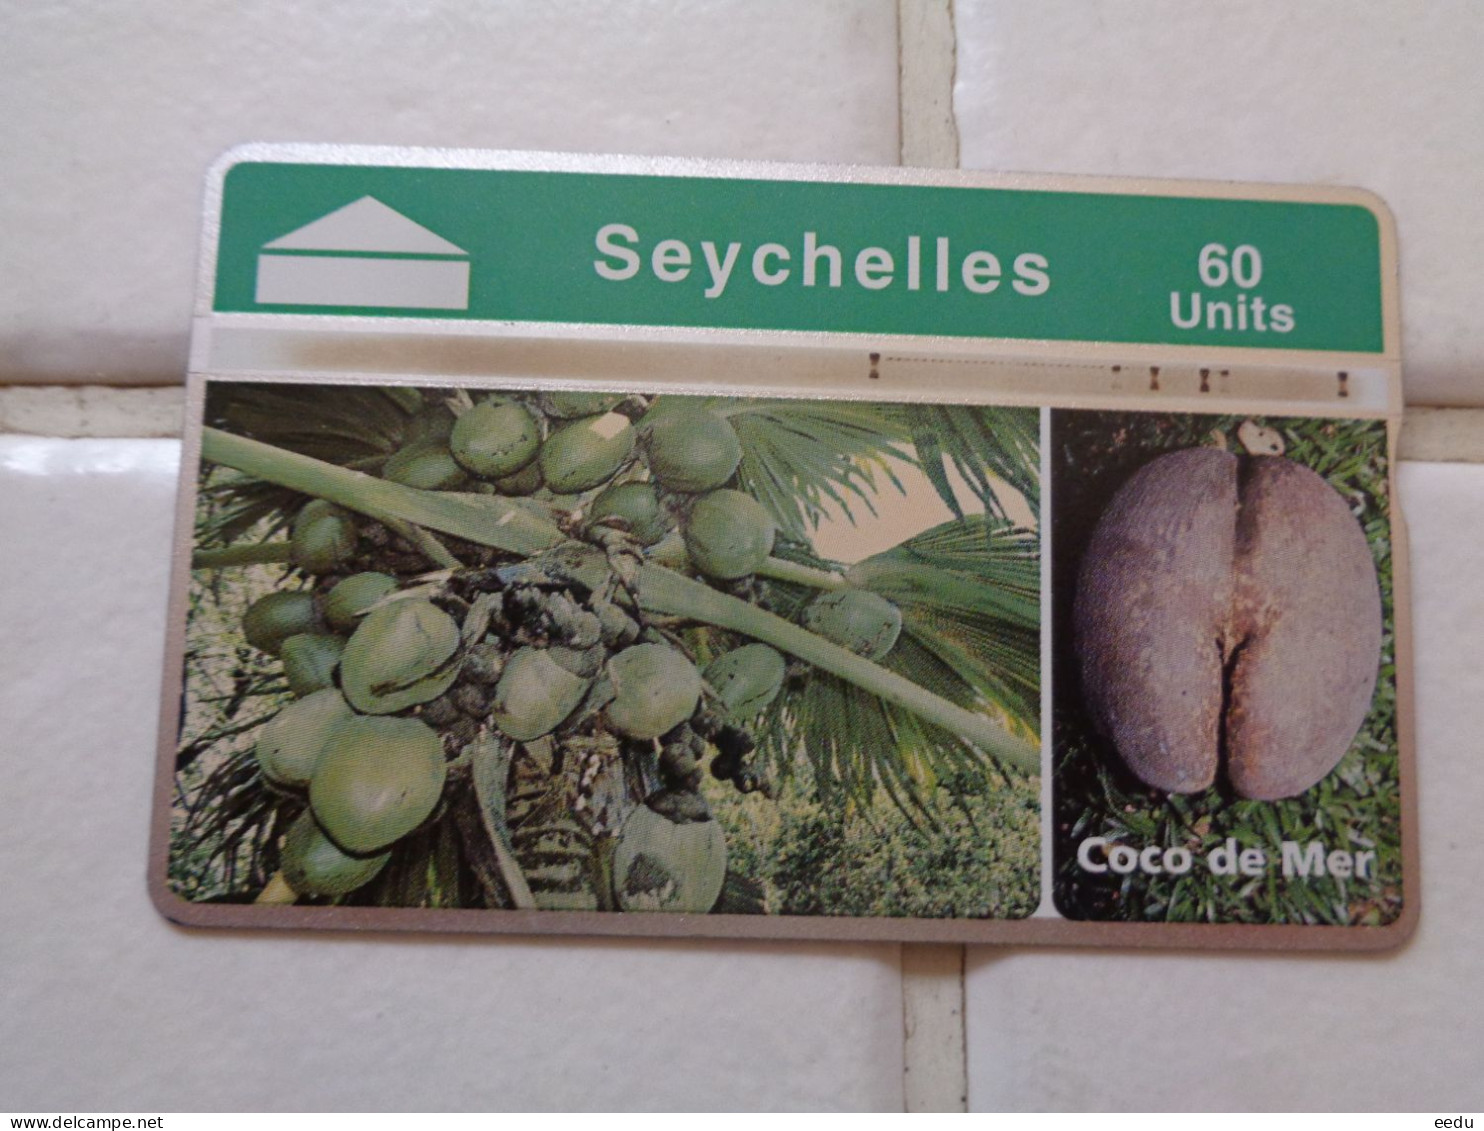 Seychelles Phonecard - Seychelles